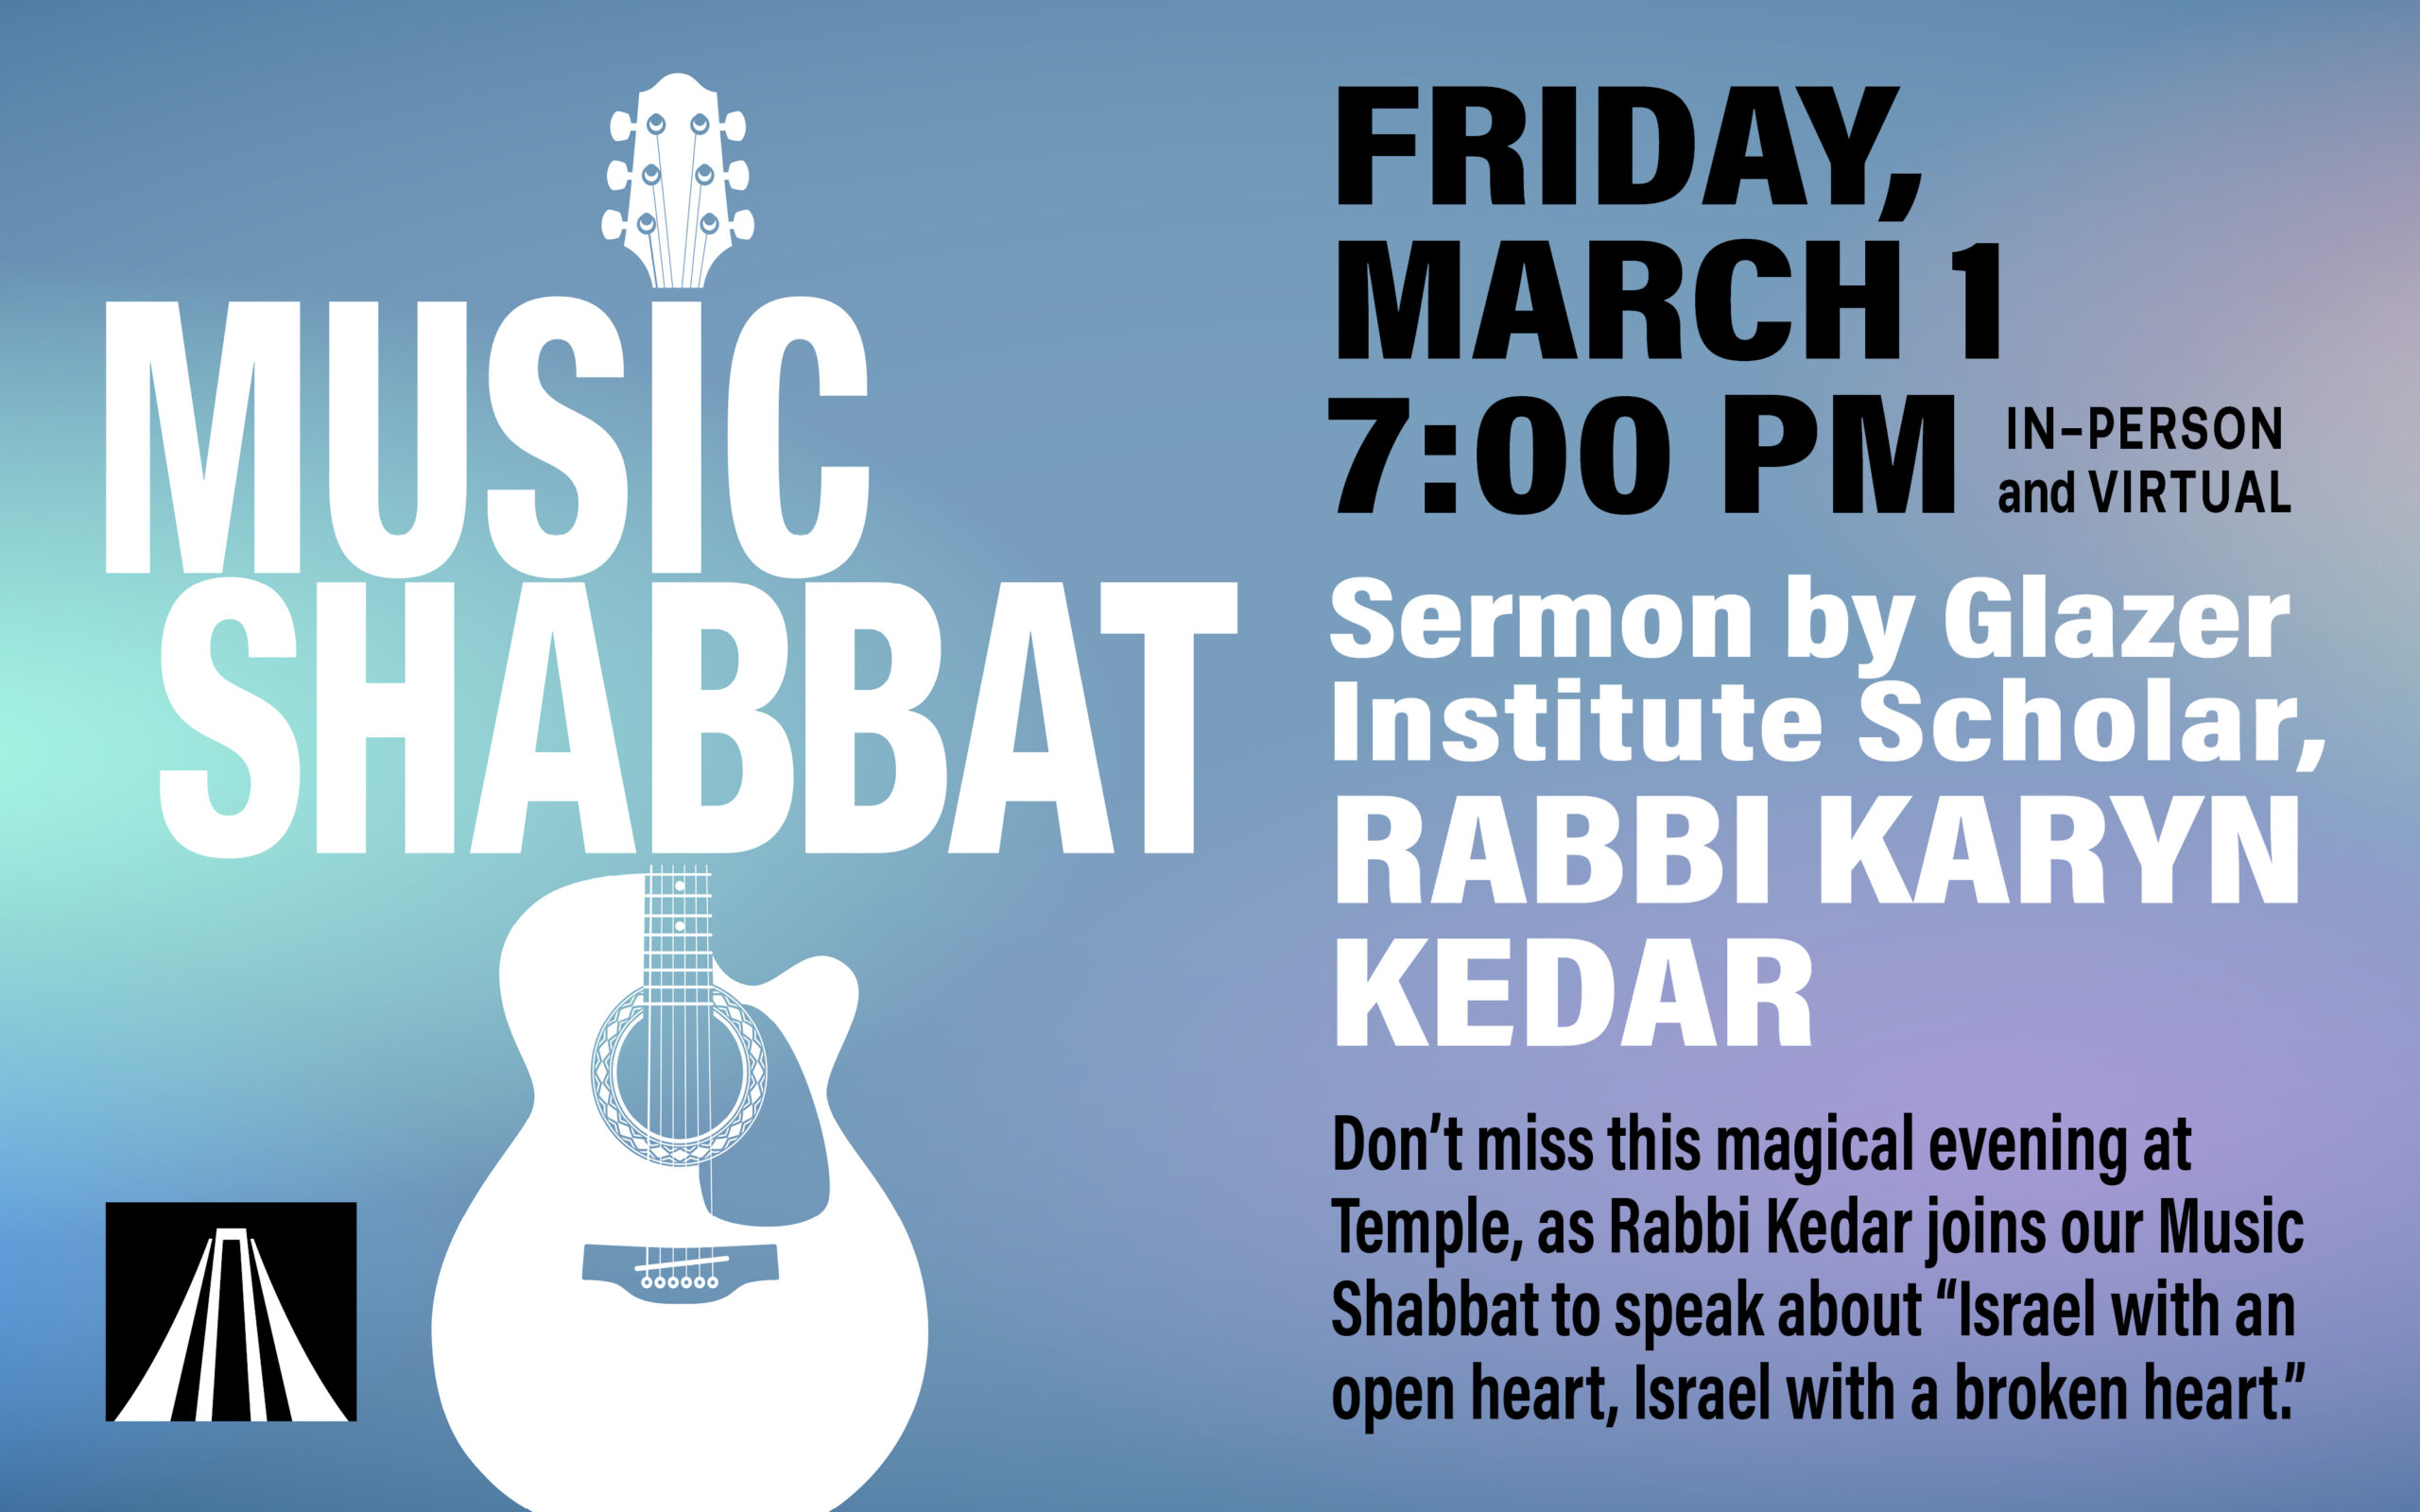 Music Shabbat with Glazer Scholar Rabbi Karyn Kedar